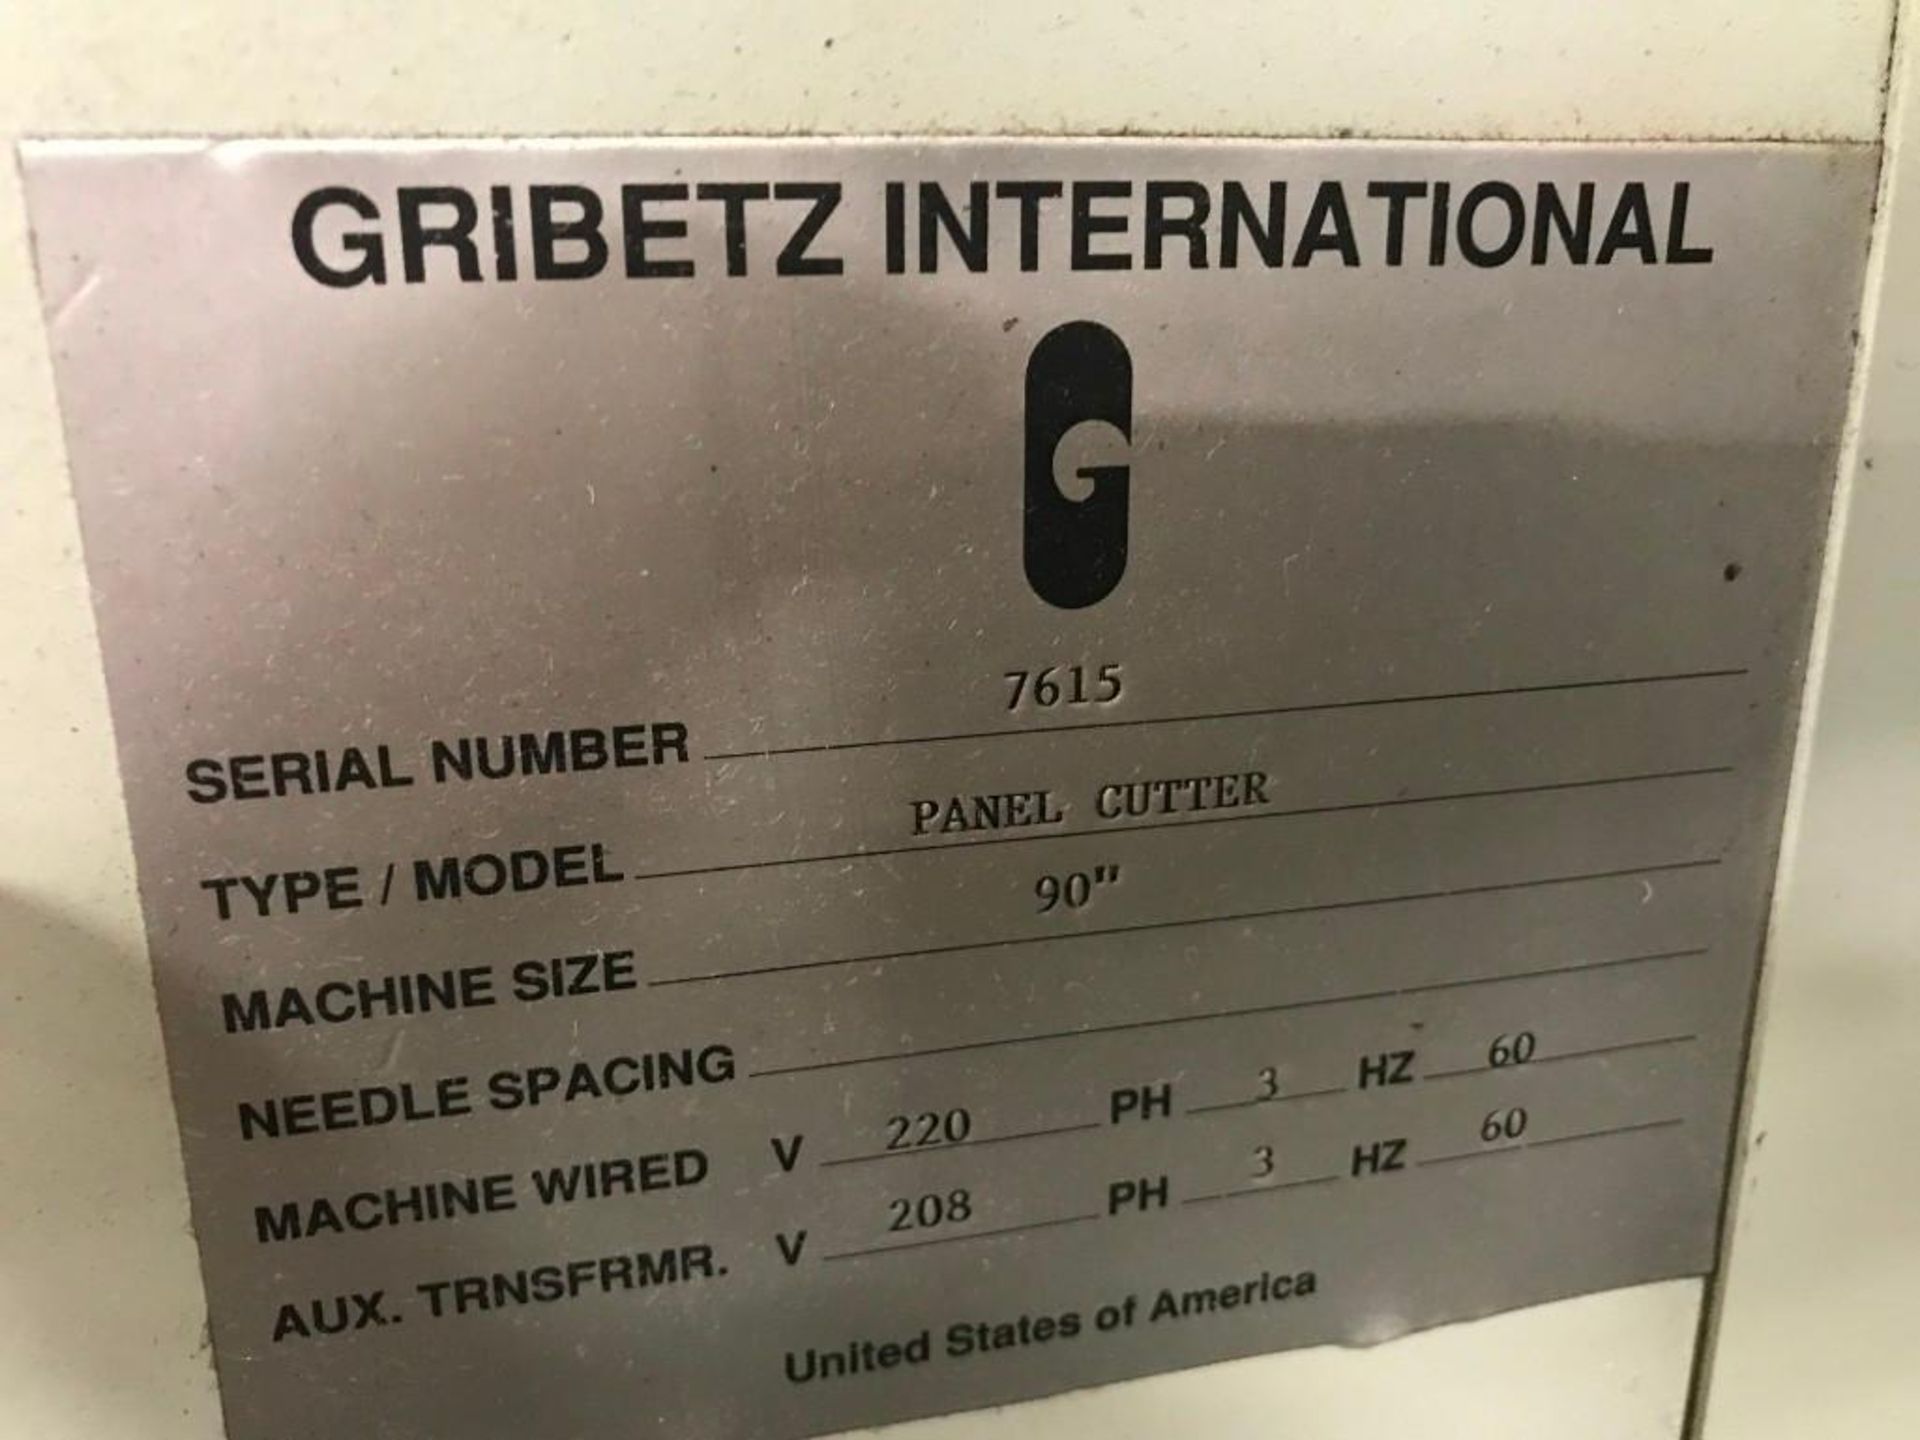 Gribetz International Panel Cutter, Series QCS-90-STD, Machine Size 90", 220/208/3/60, Ser#7615 - Image 4 of 4